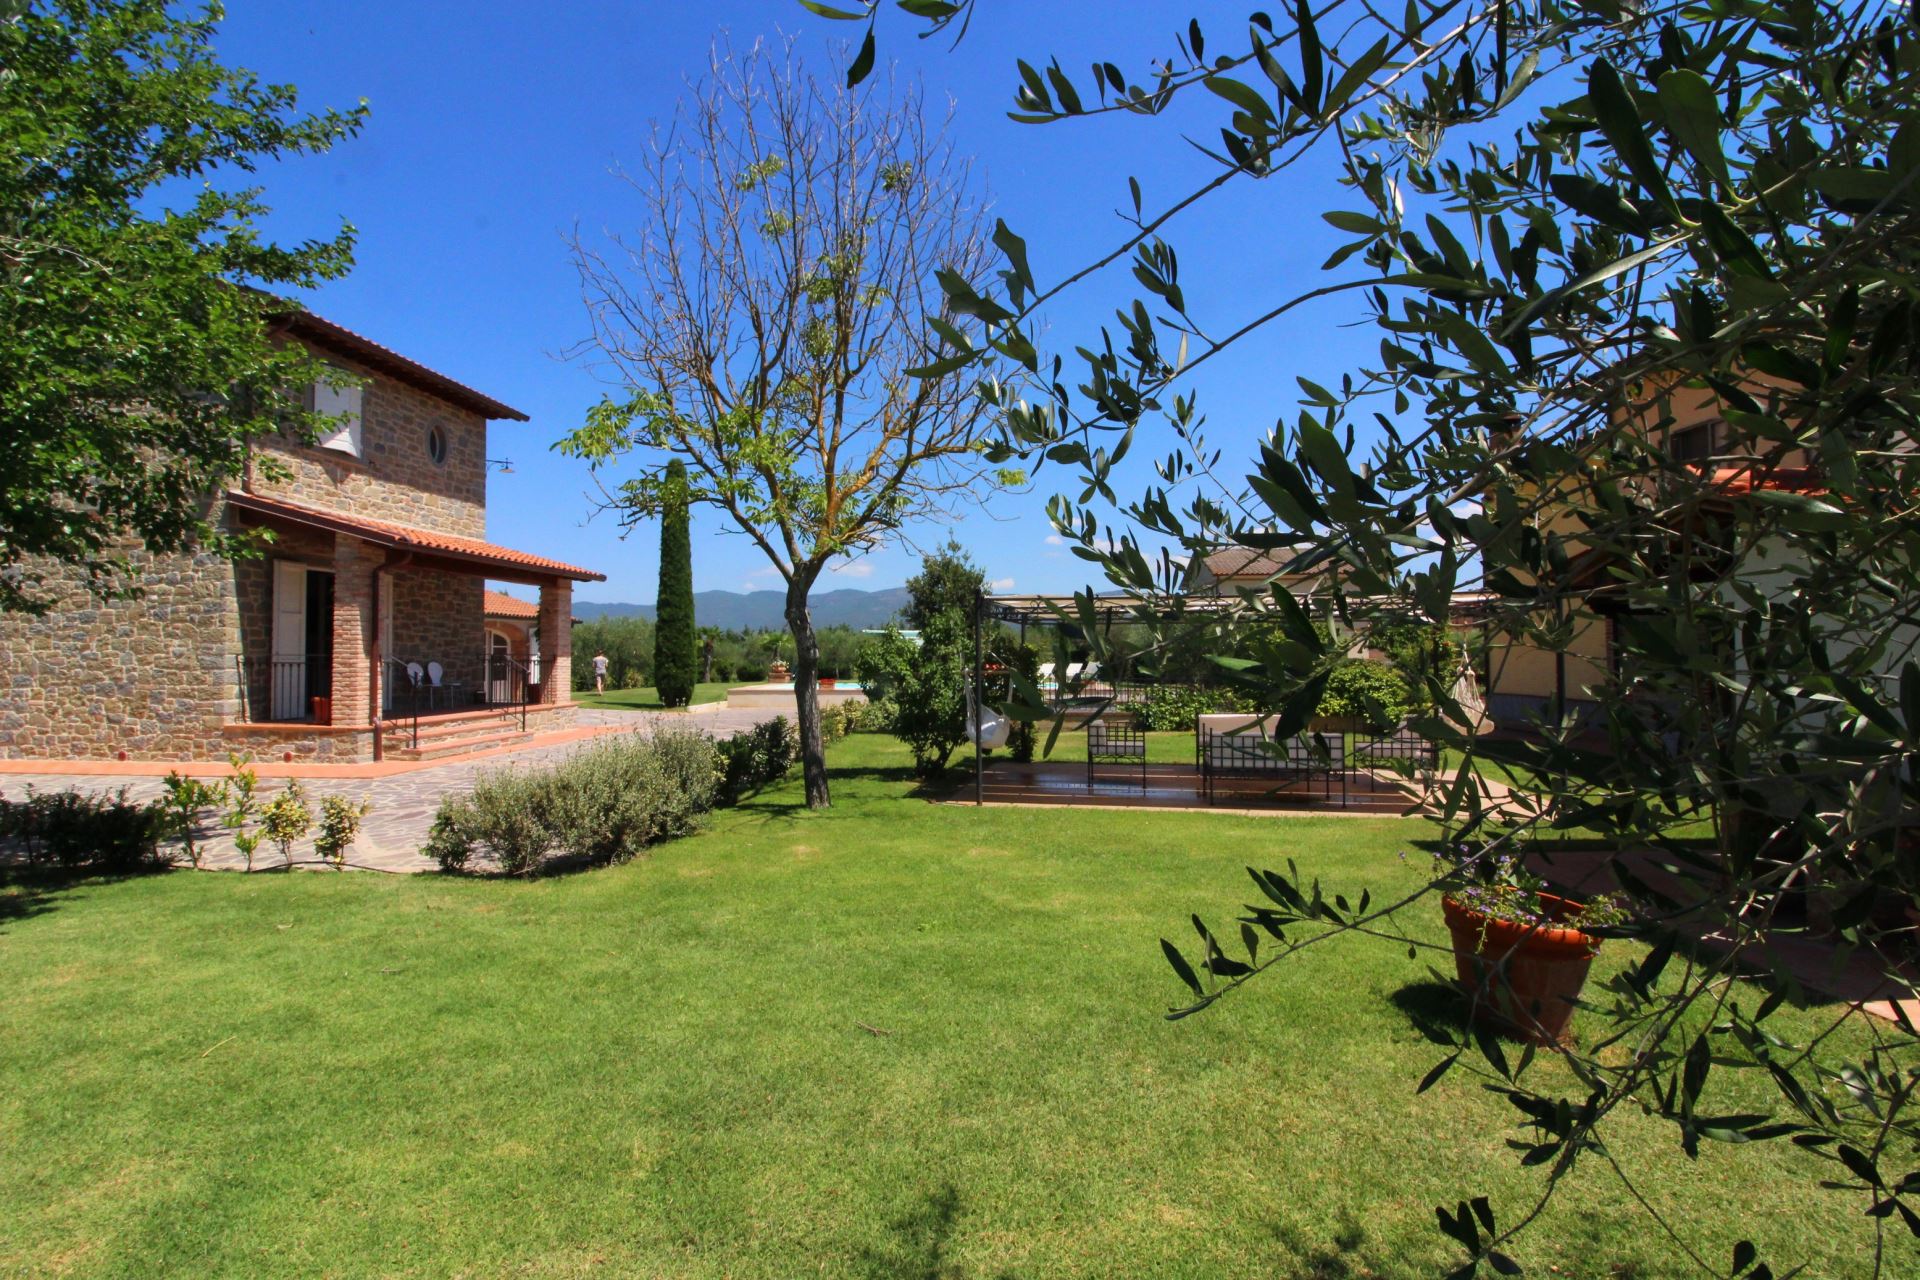 431_ccbf773_Vakantiehuis met privé zwembad Casetta il Girasole Toscane Cortona - Arezzo (20)